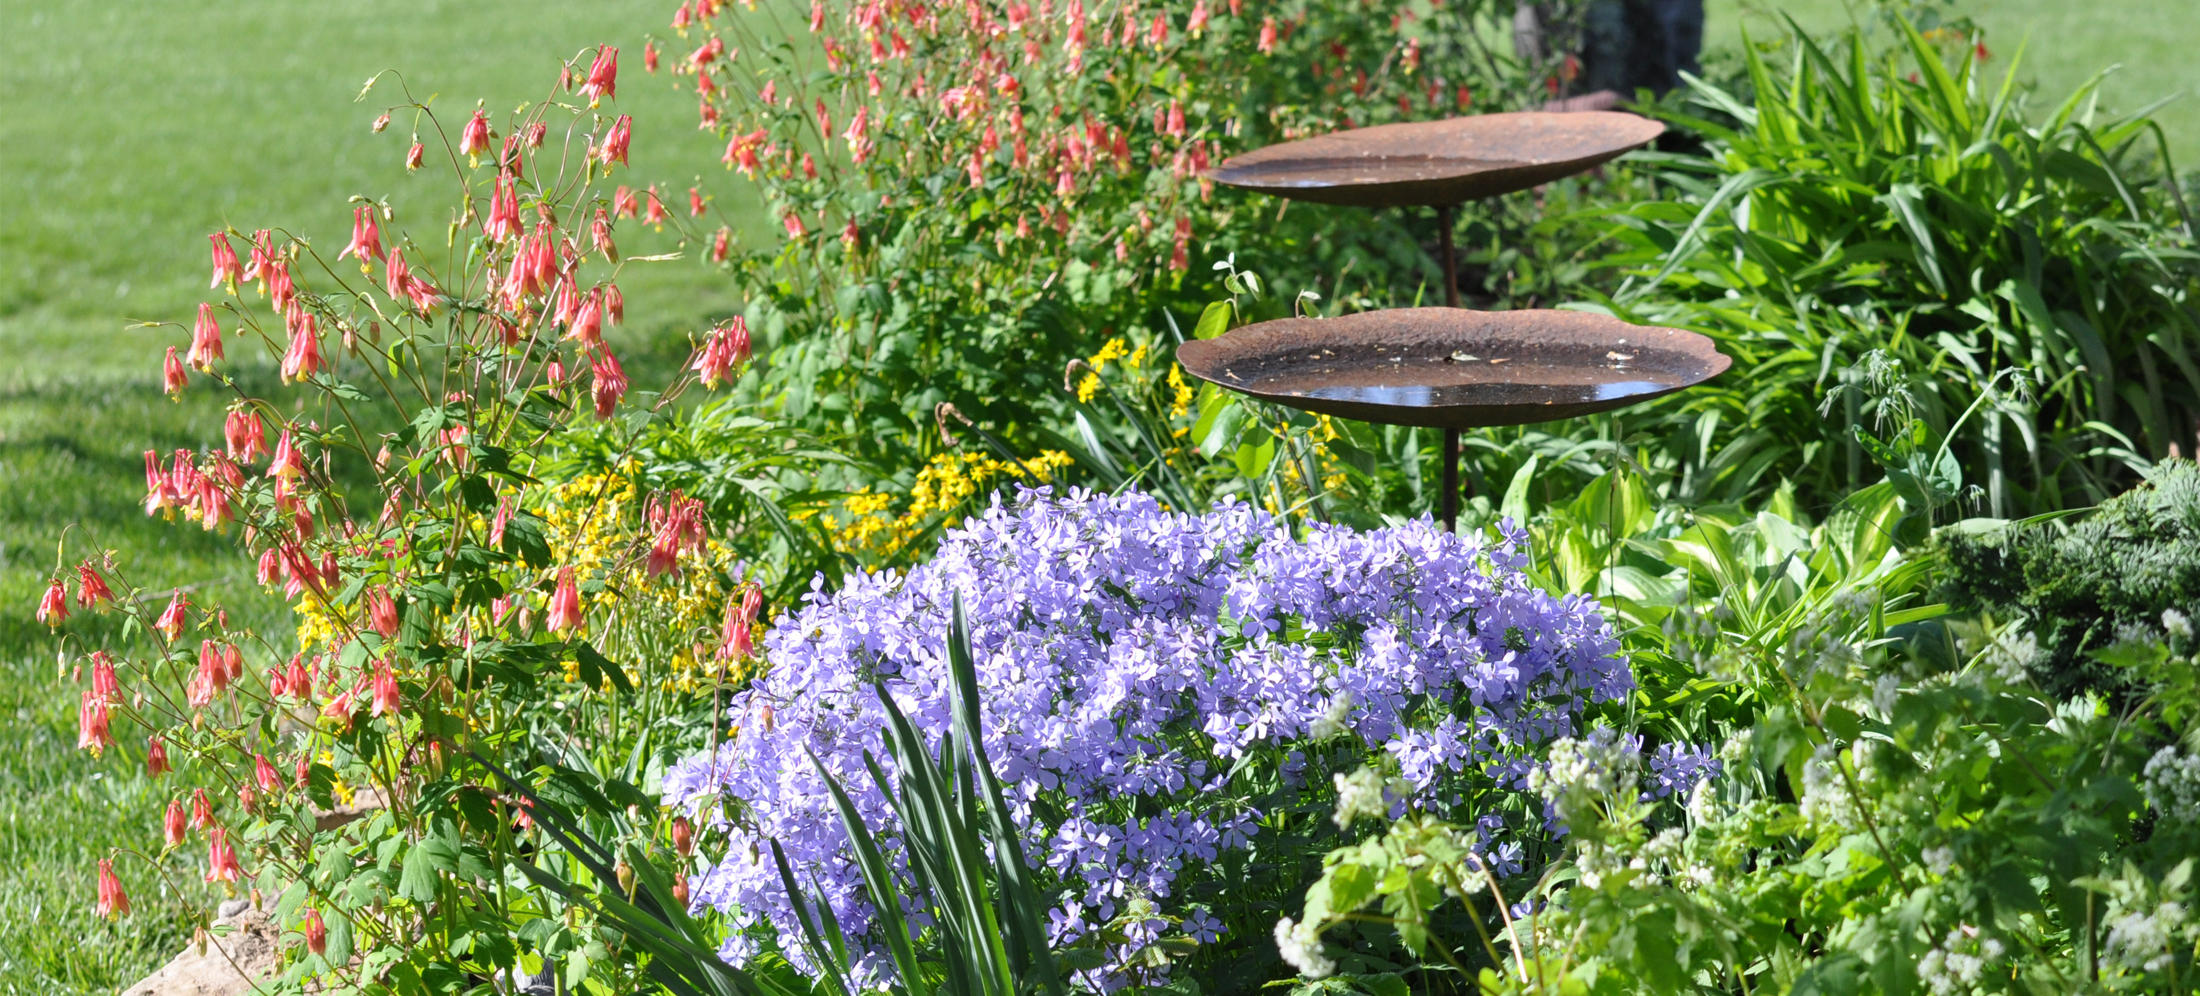 sweeten-up-your-backyard-with-these-native-nectar-plants-audubon